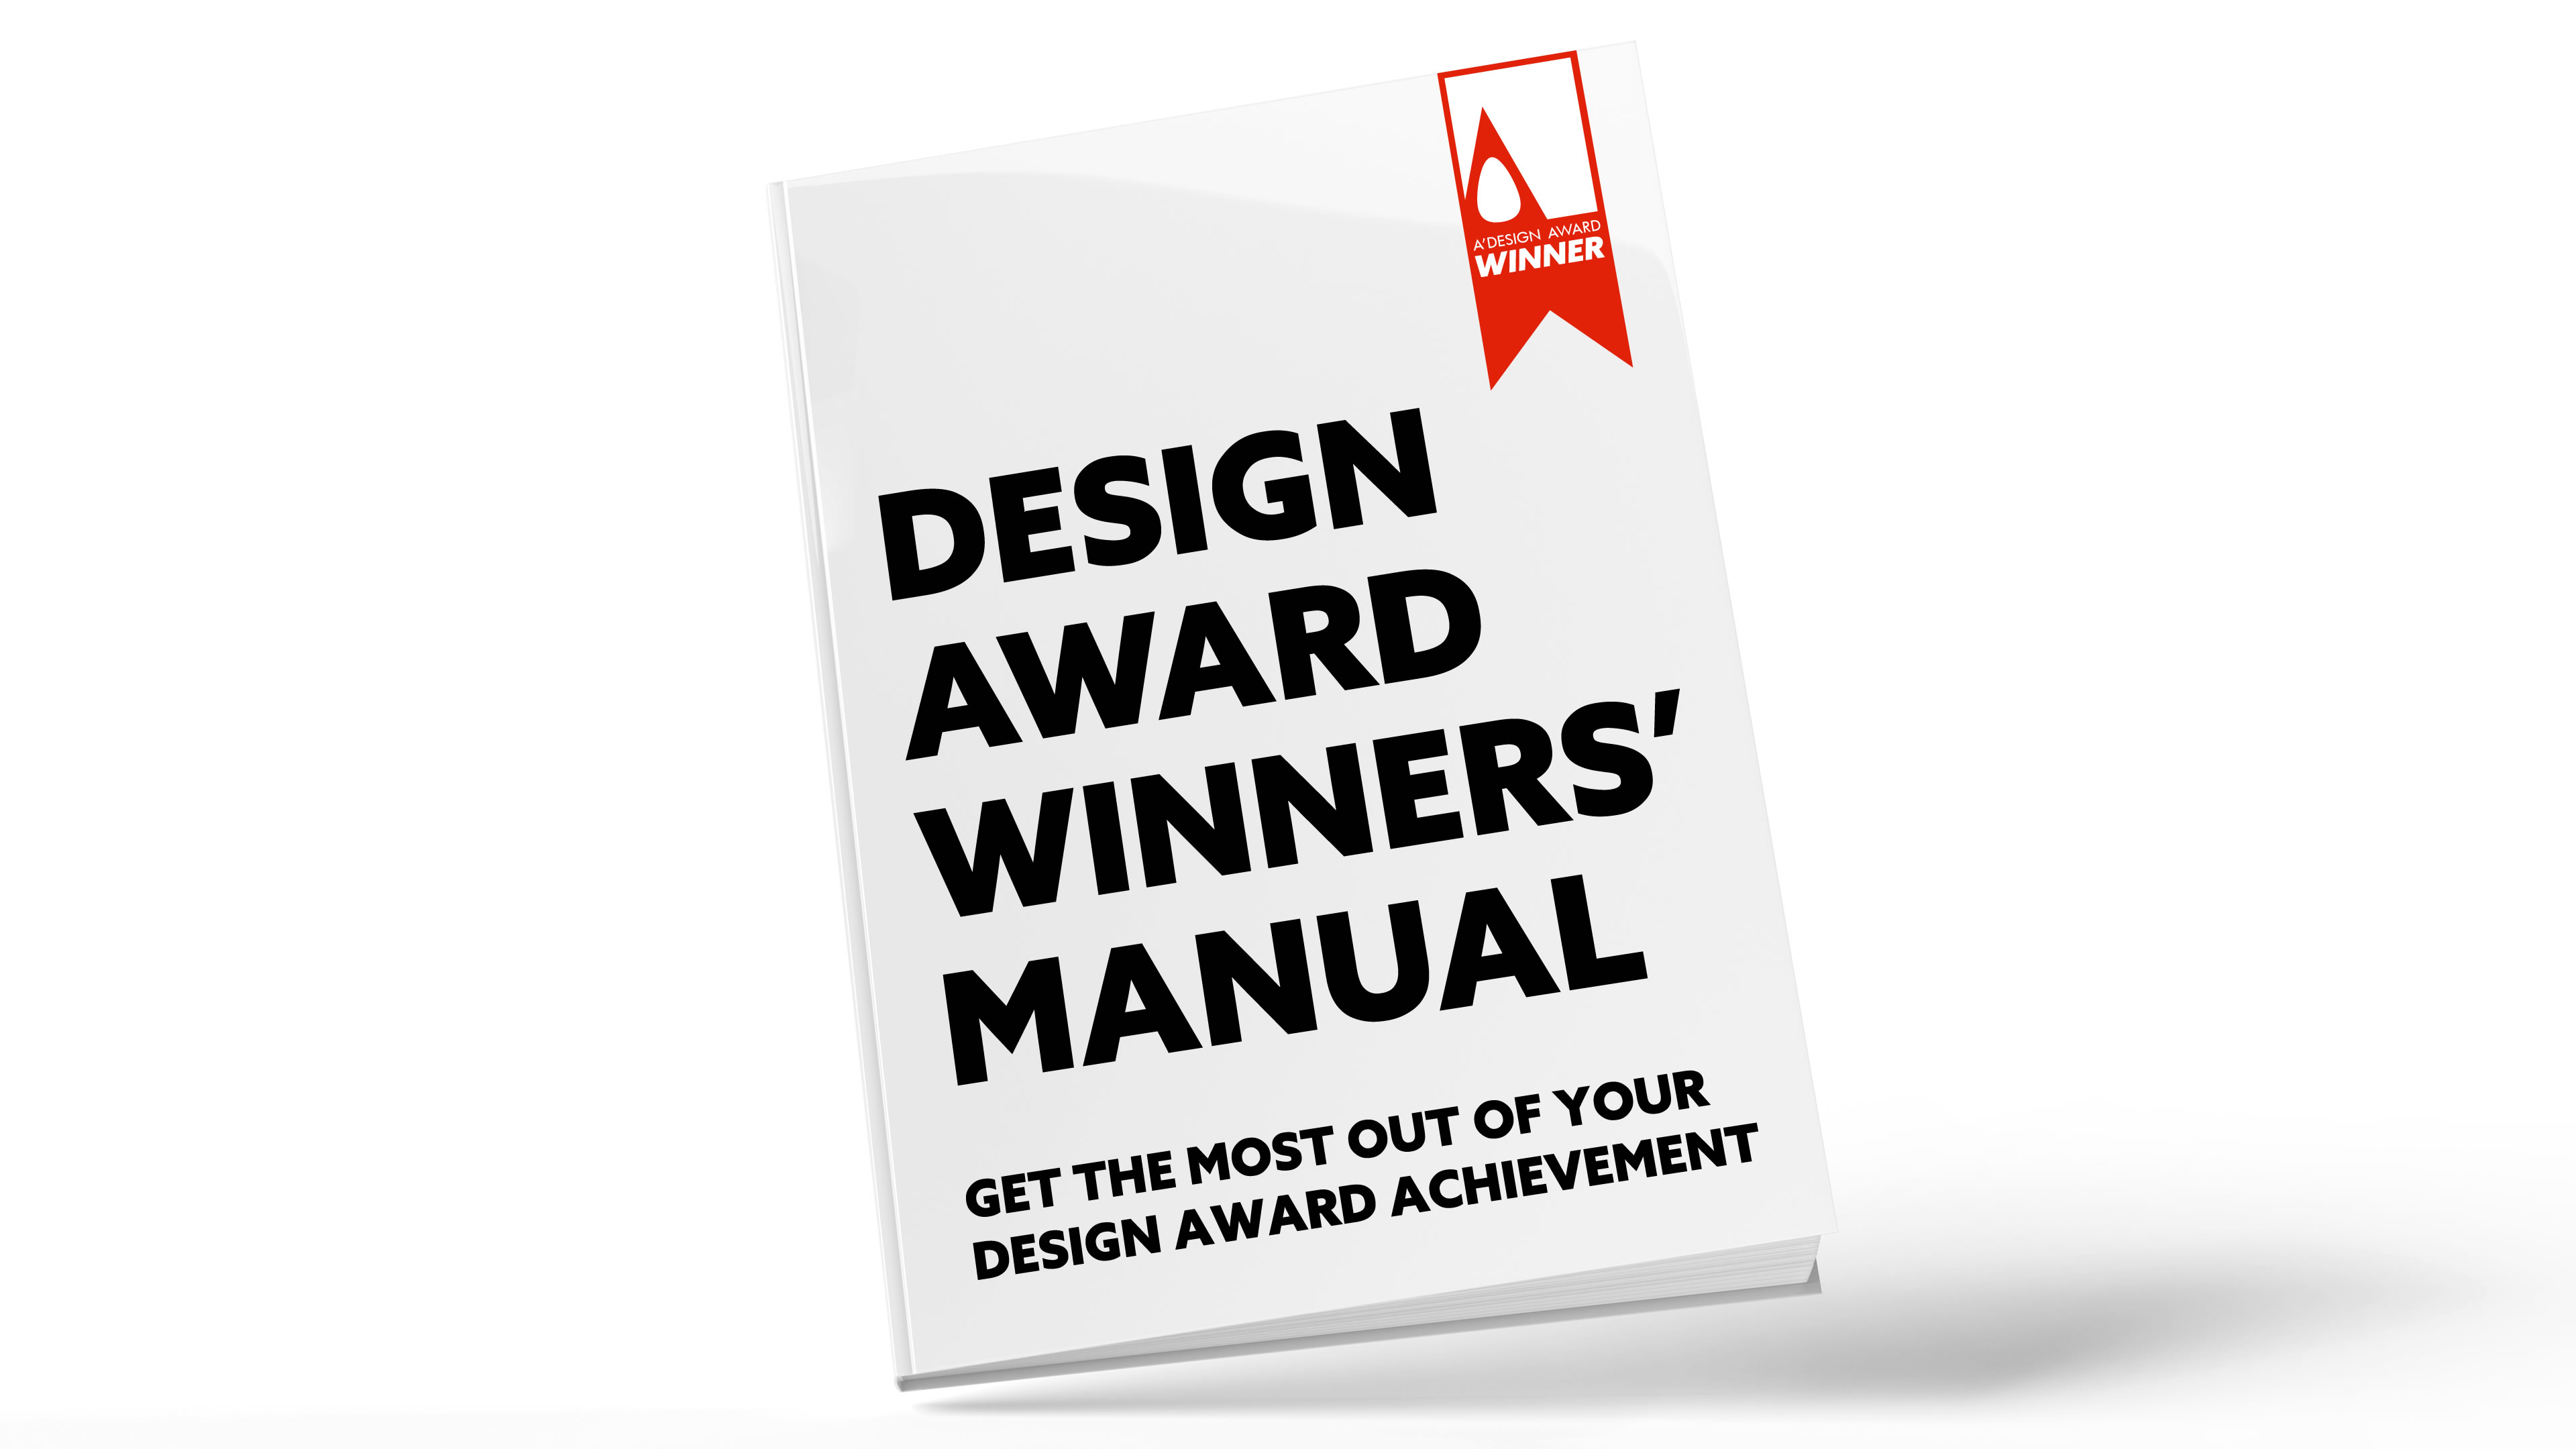 Design Award Winner's Manual